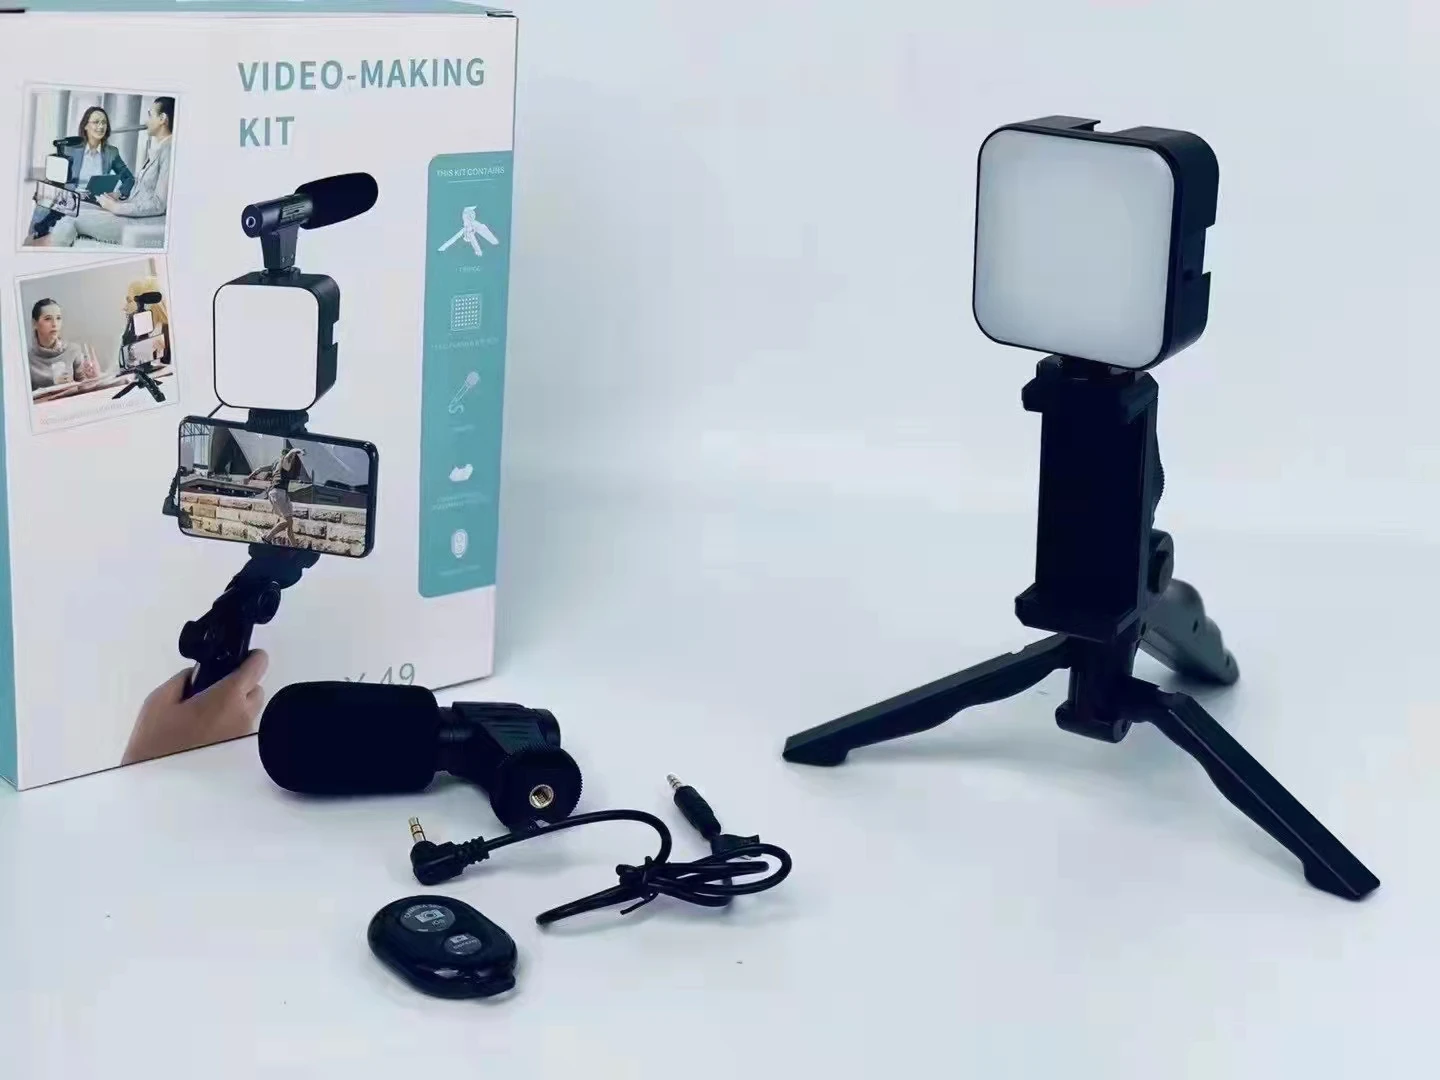 AY-49 Video Vlogger Kits Microphone LED Fill Light Mini Tripod For Phone Vlog Video Recording Condenser